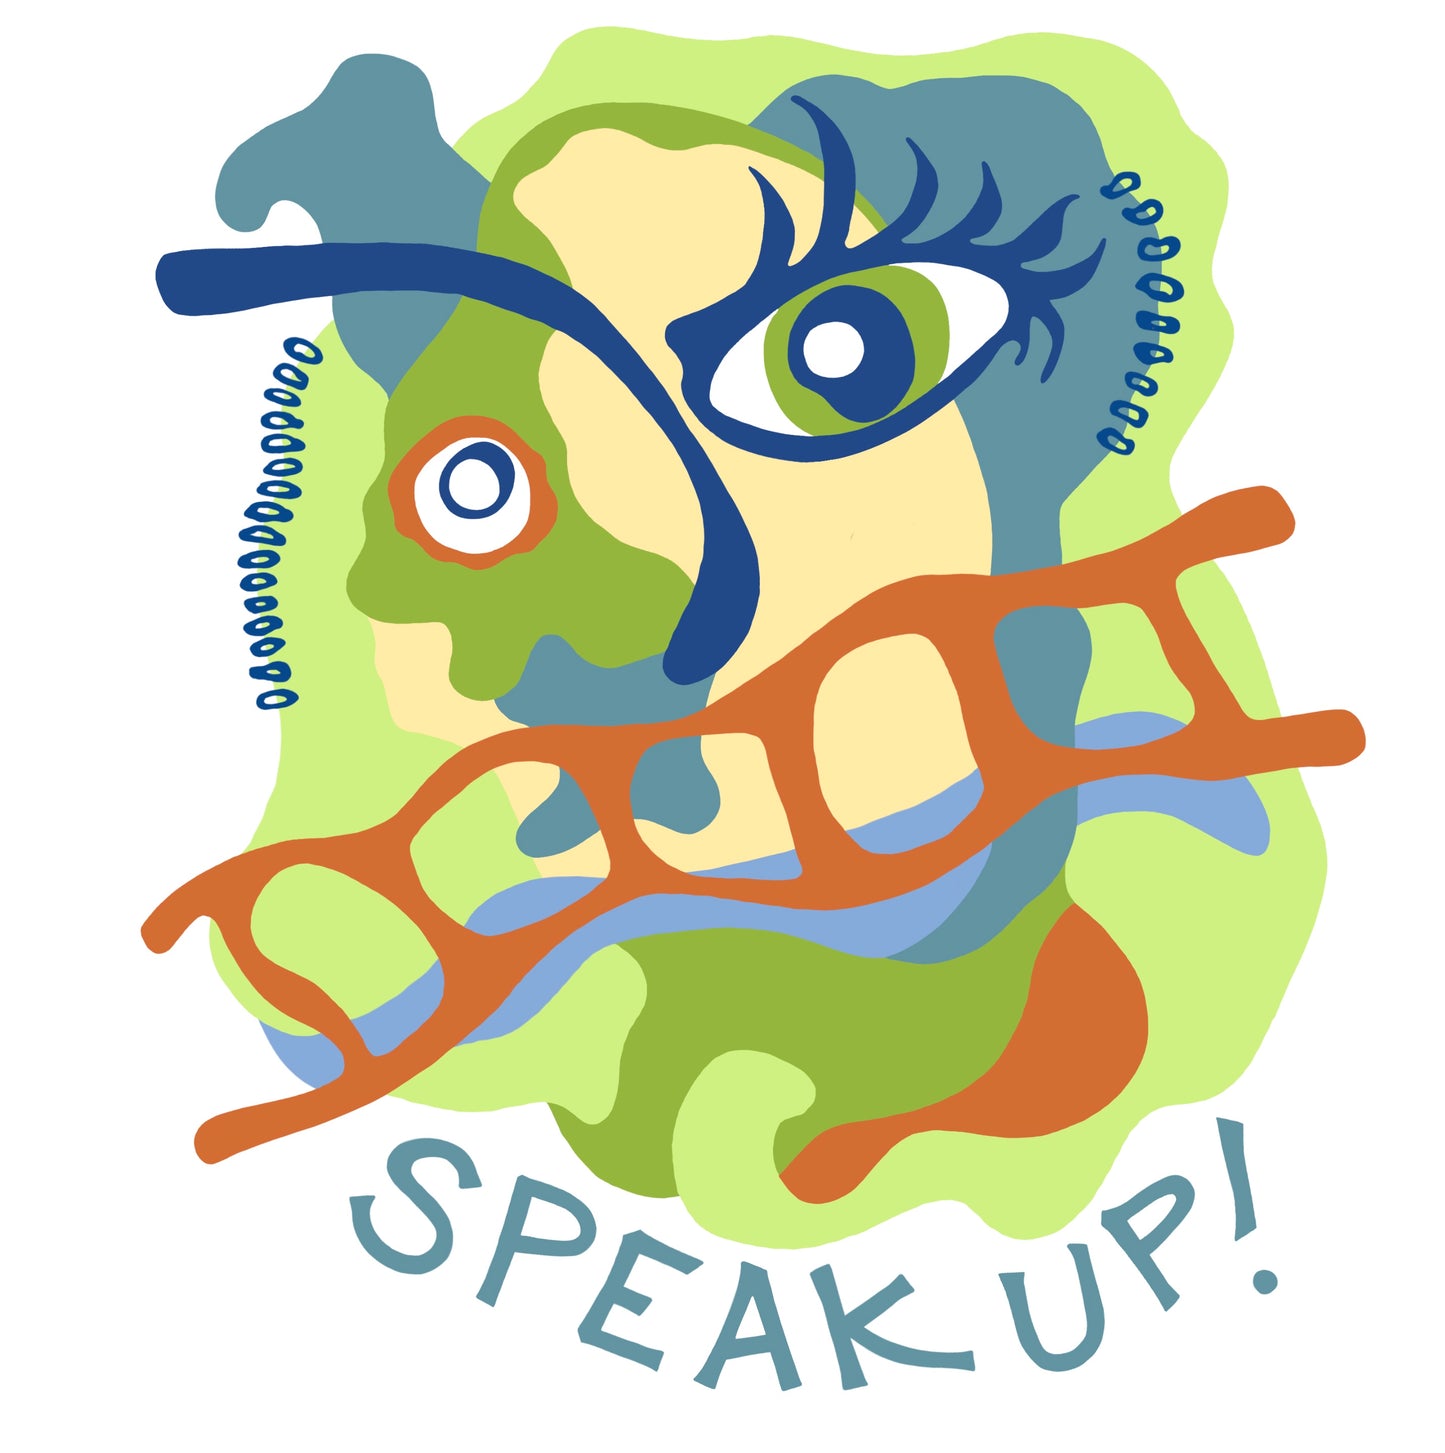 Speak Up | Full Color Die-Cut Vinyl Sticker